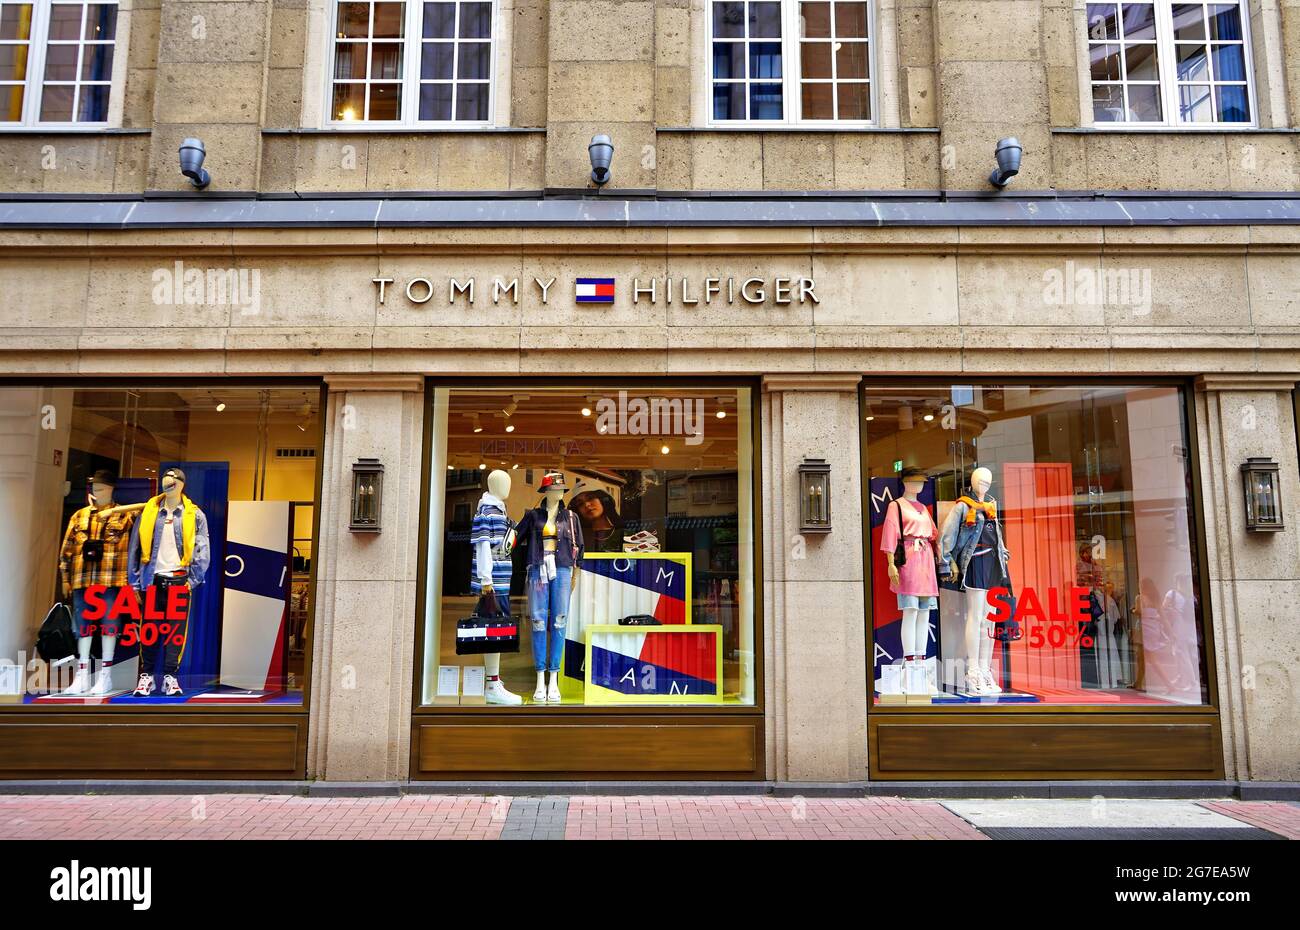 Tommy Hilfiger shop window on Schadowstraße in city centre of Düsseldorf, Germany - Alamy